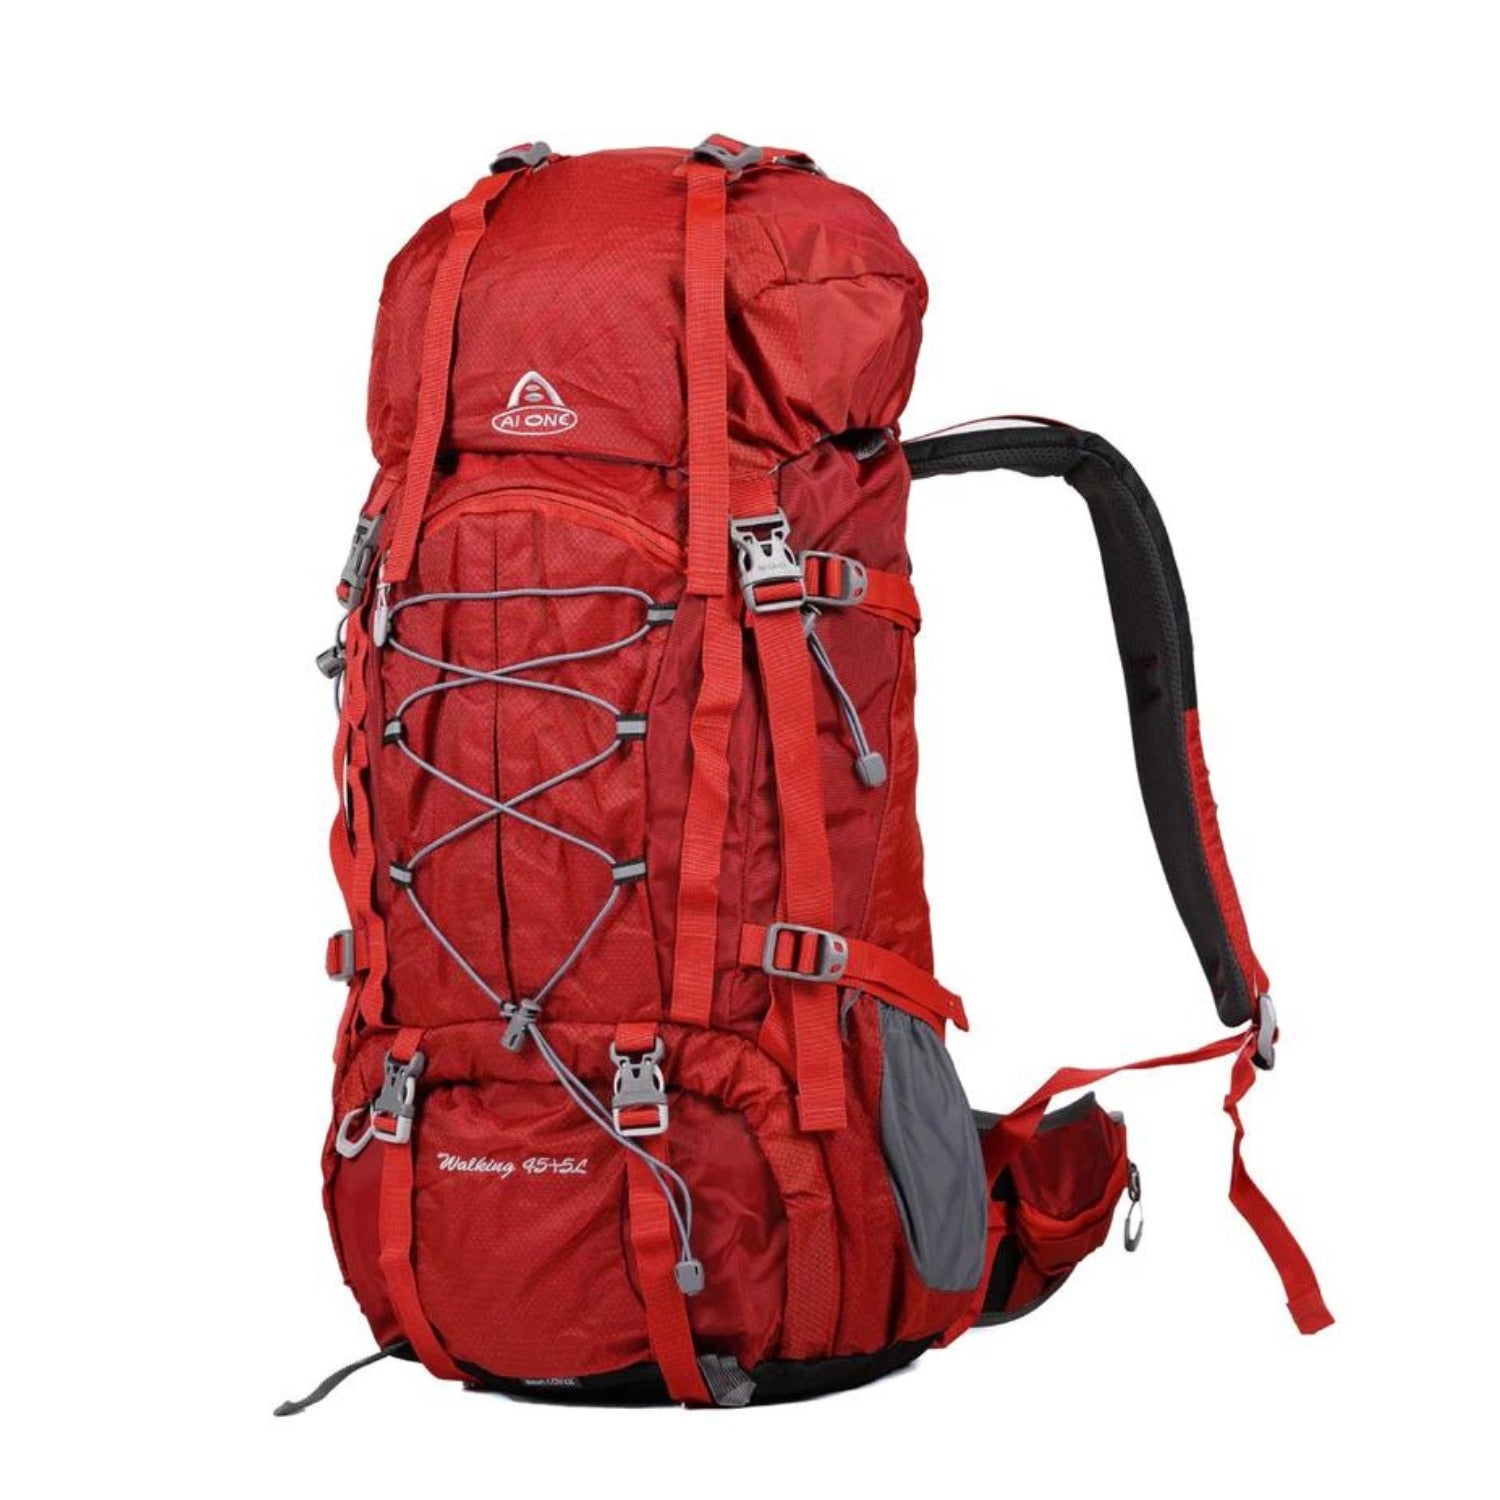 Buy Gokyo Pro Trekking Backpack 45 + 5 Ltrs Red | Trekking Backpack at Gokyo Outdoor Clothing & Gear